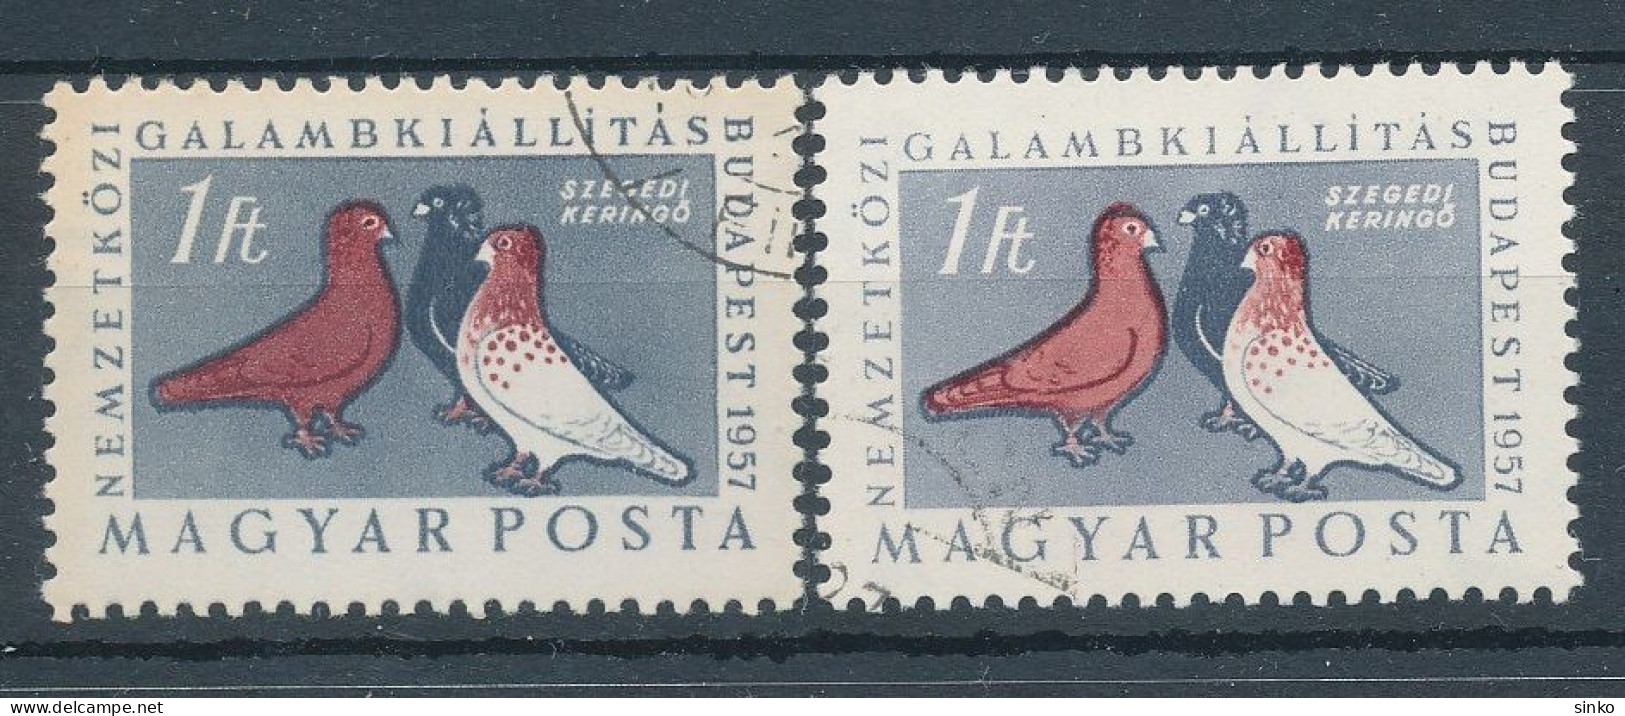 1957. Hungarian Pigeon Breeds - L - Misprint - Errors, Freaks & Oddities (EFO)